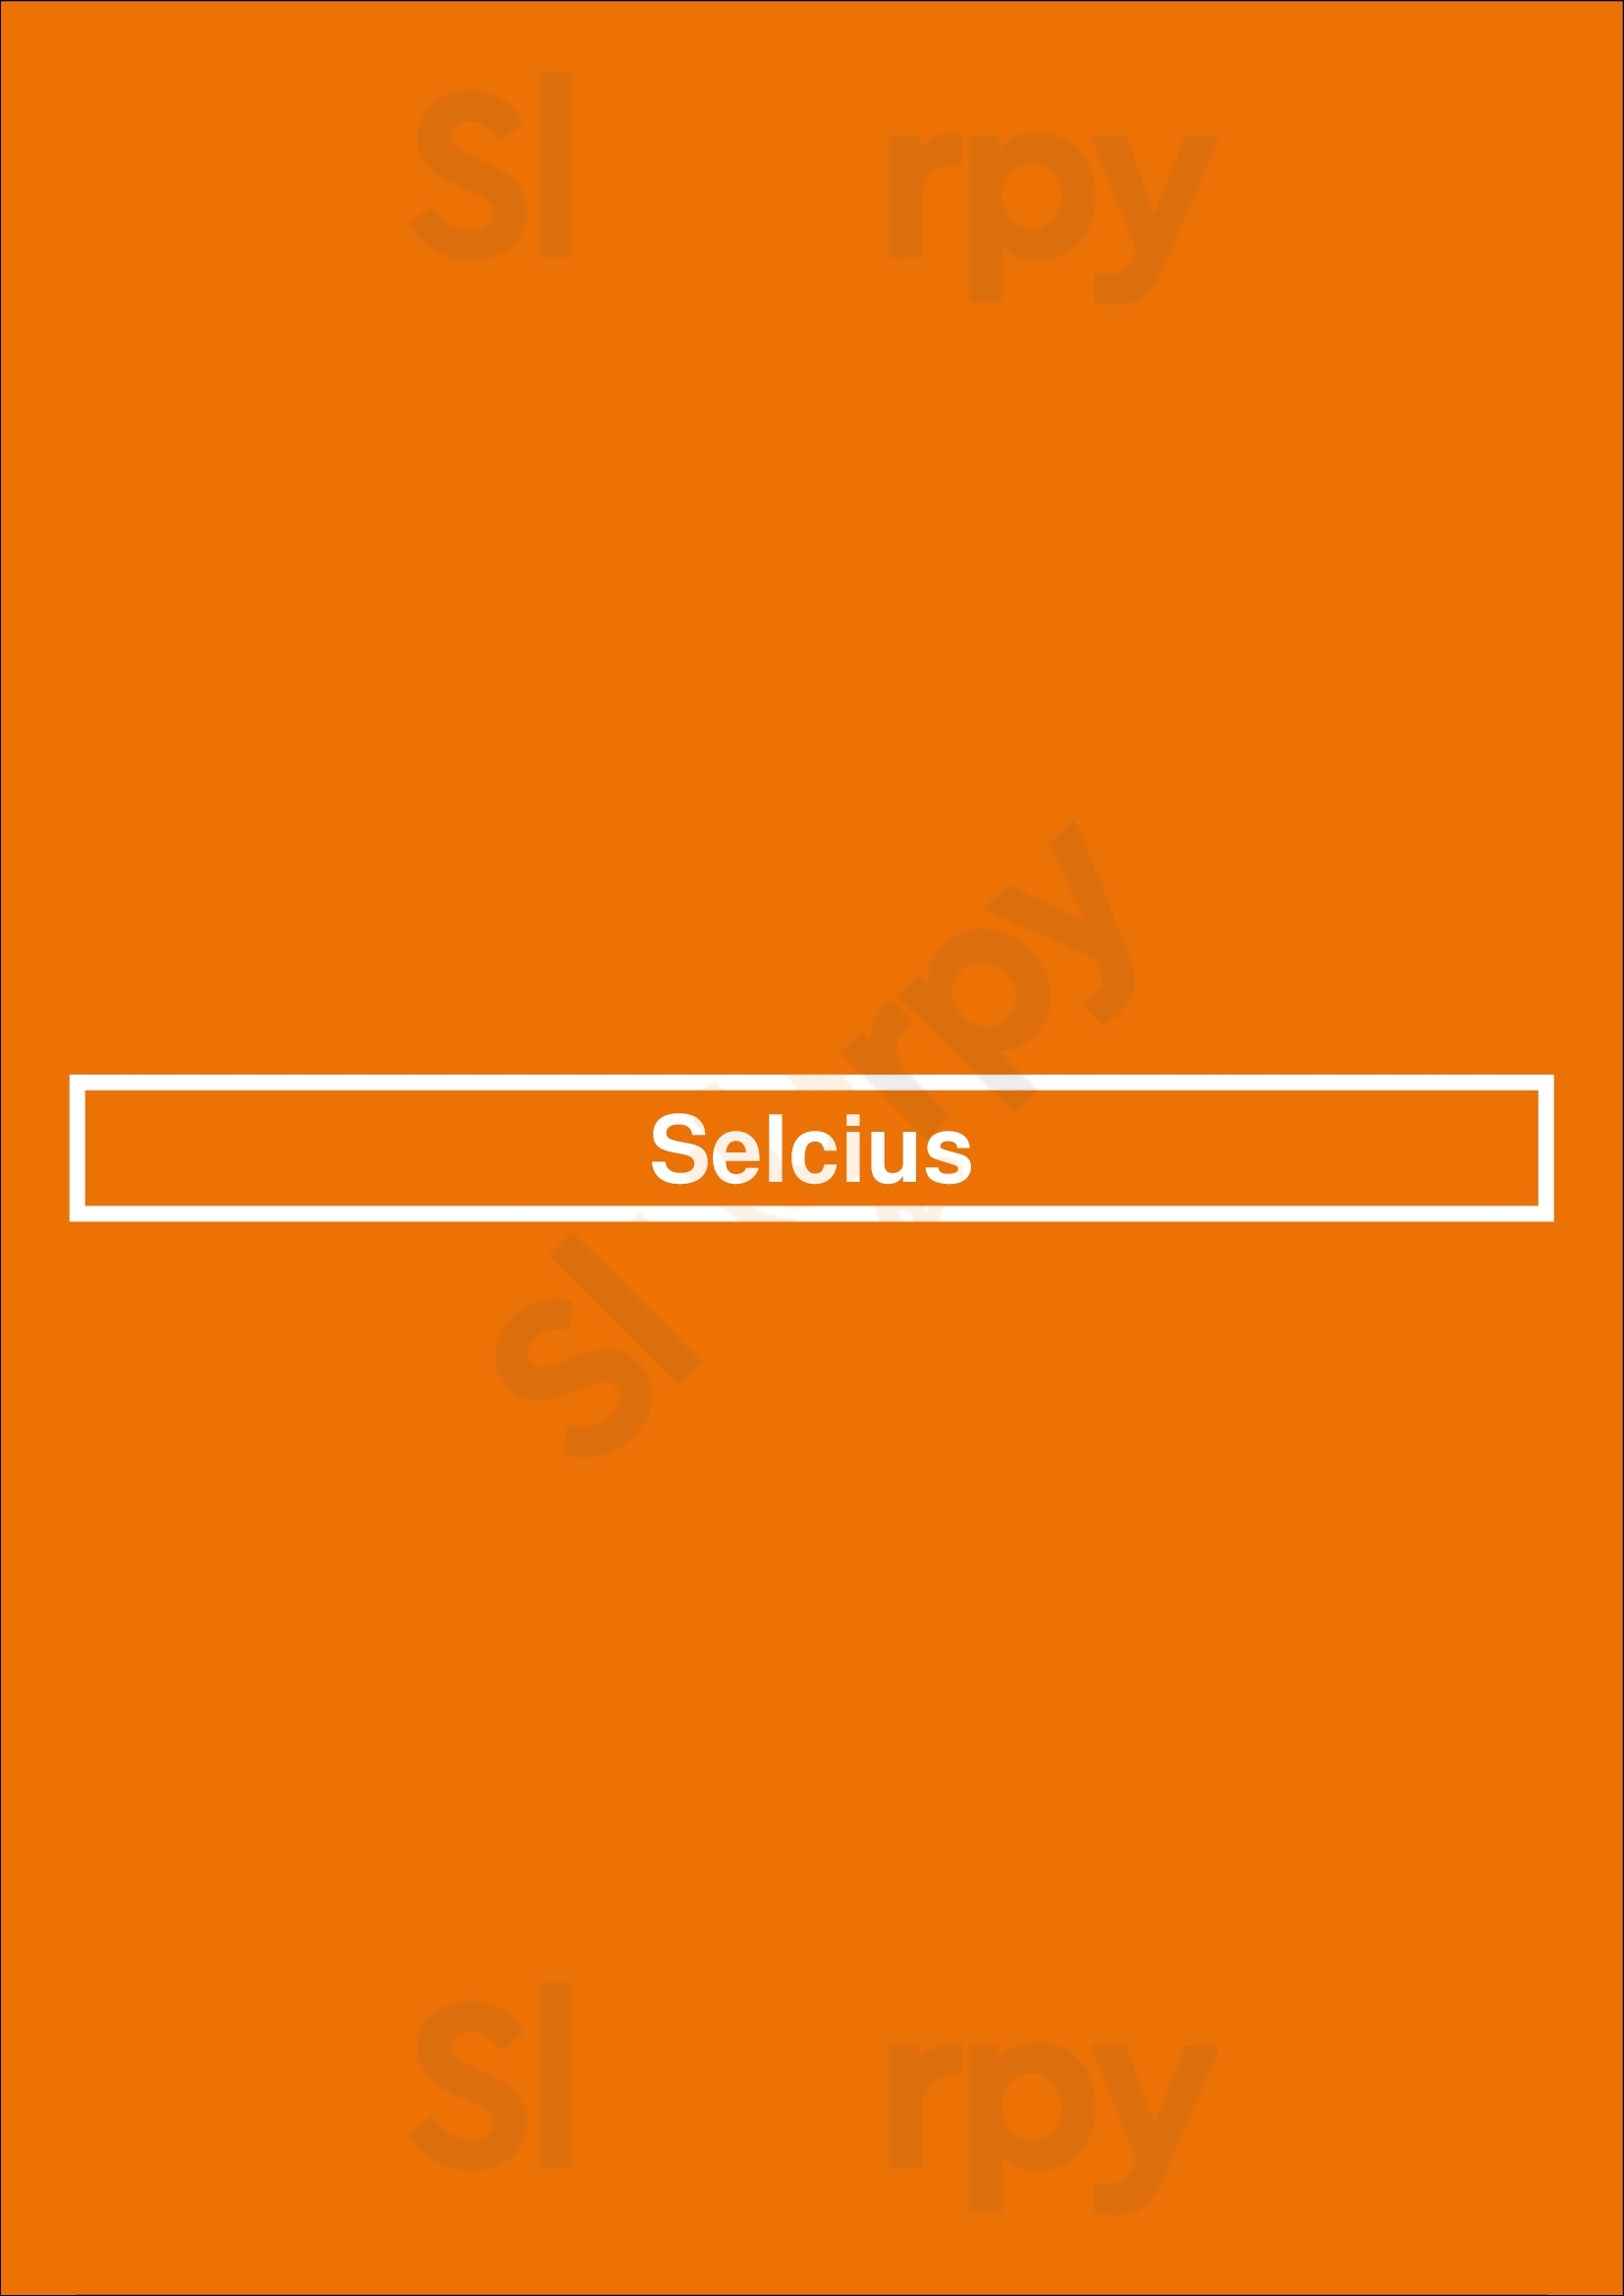 Selcius Lyon Menu - 1